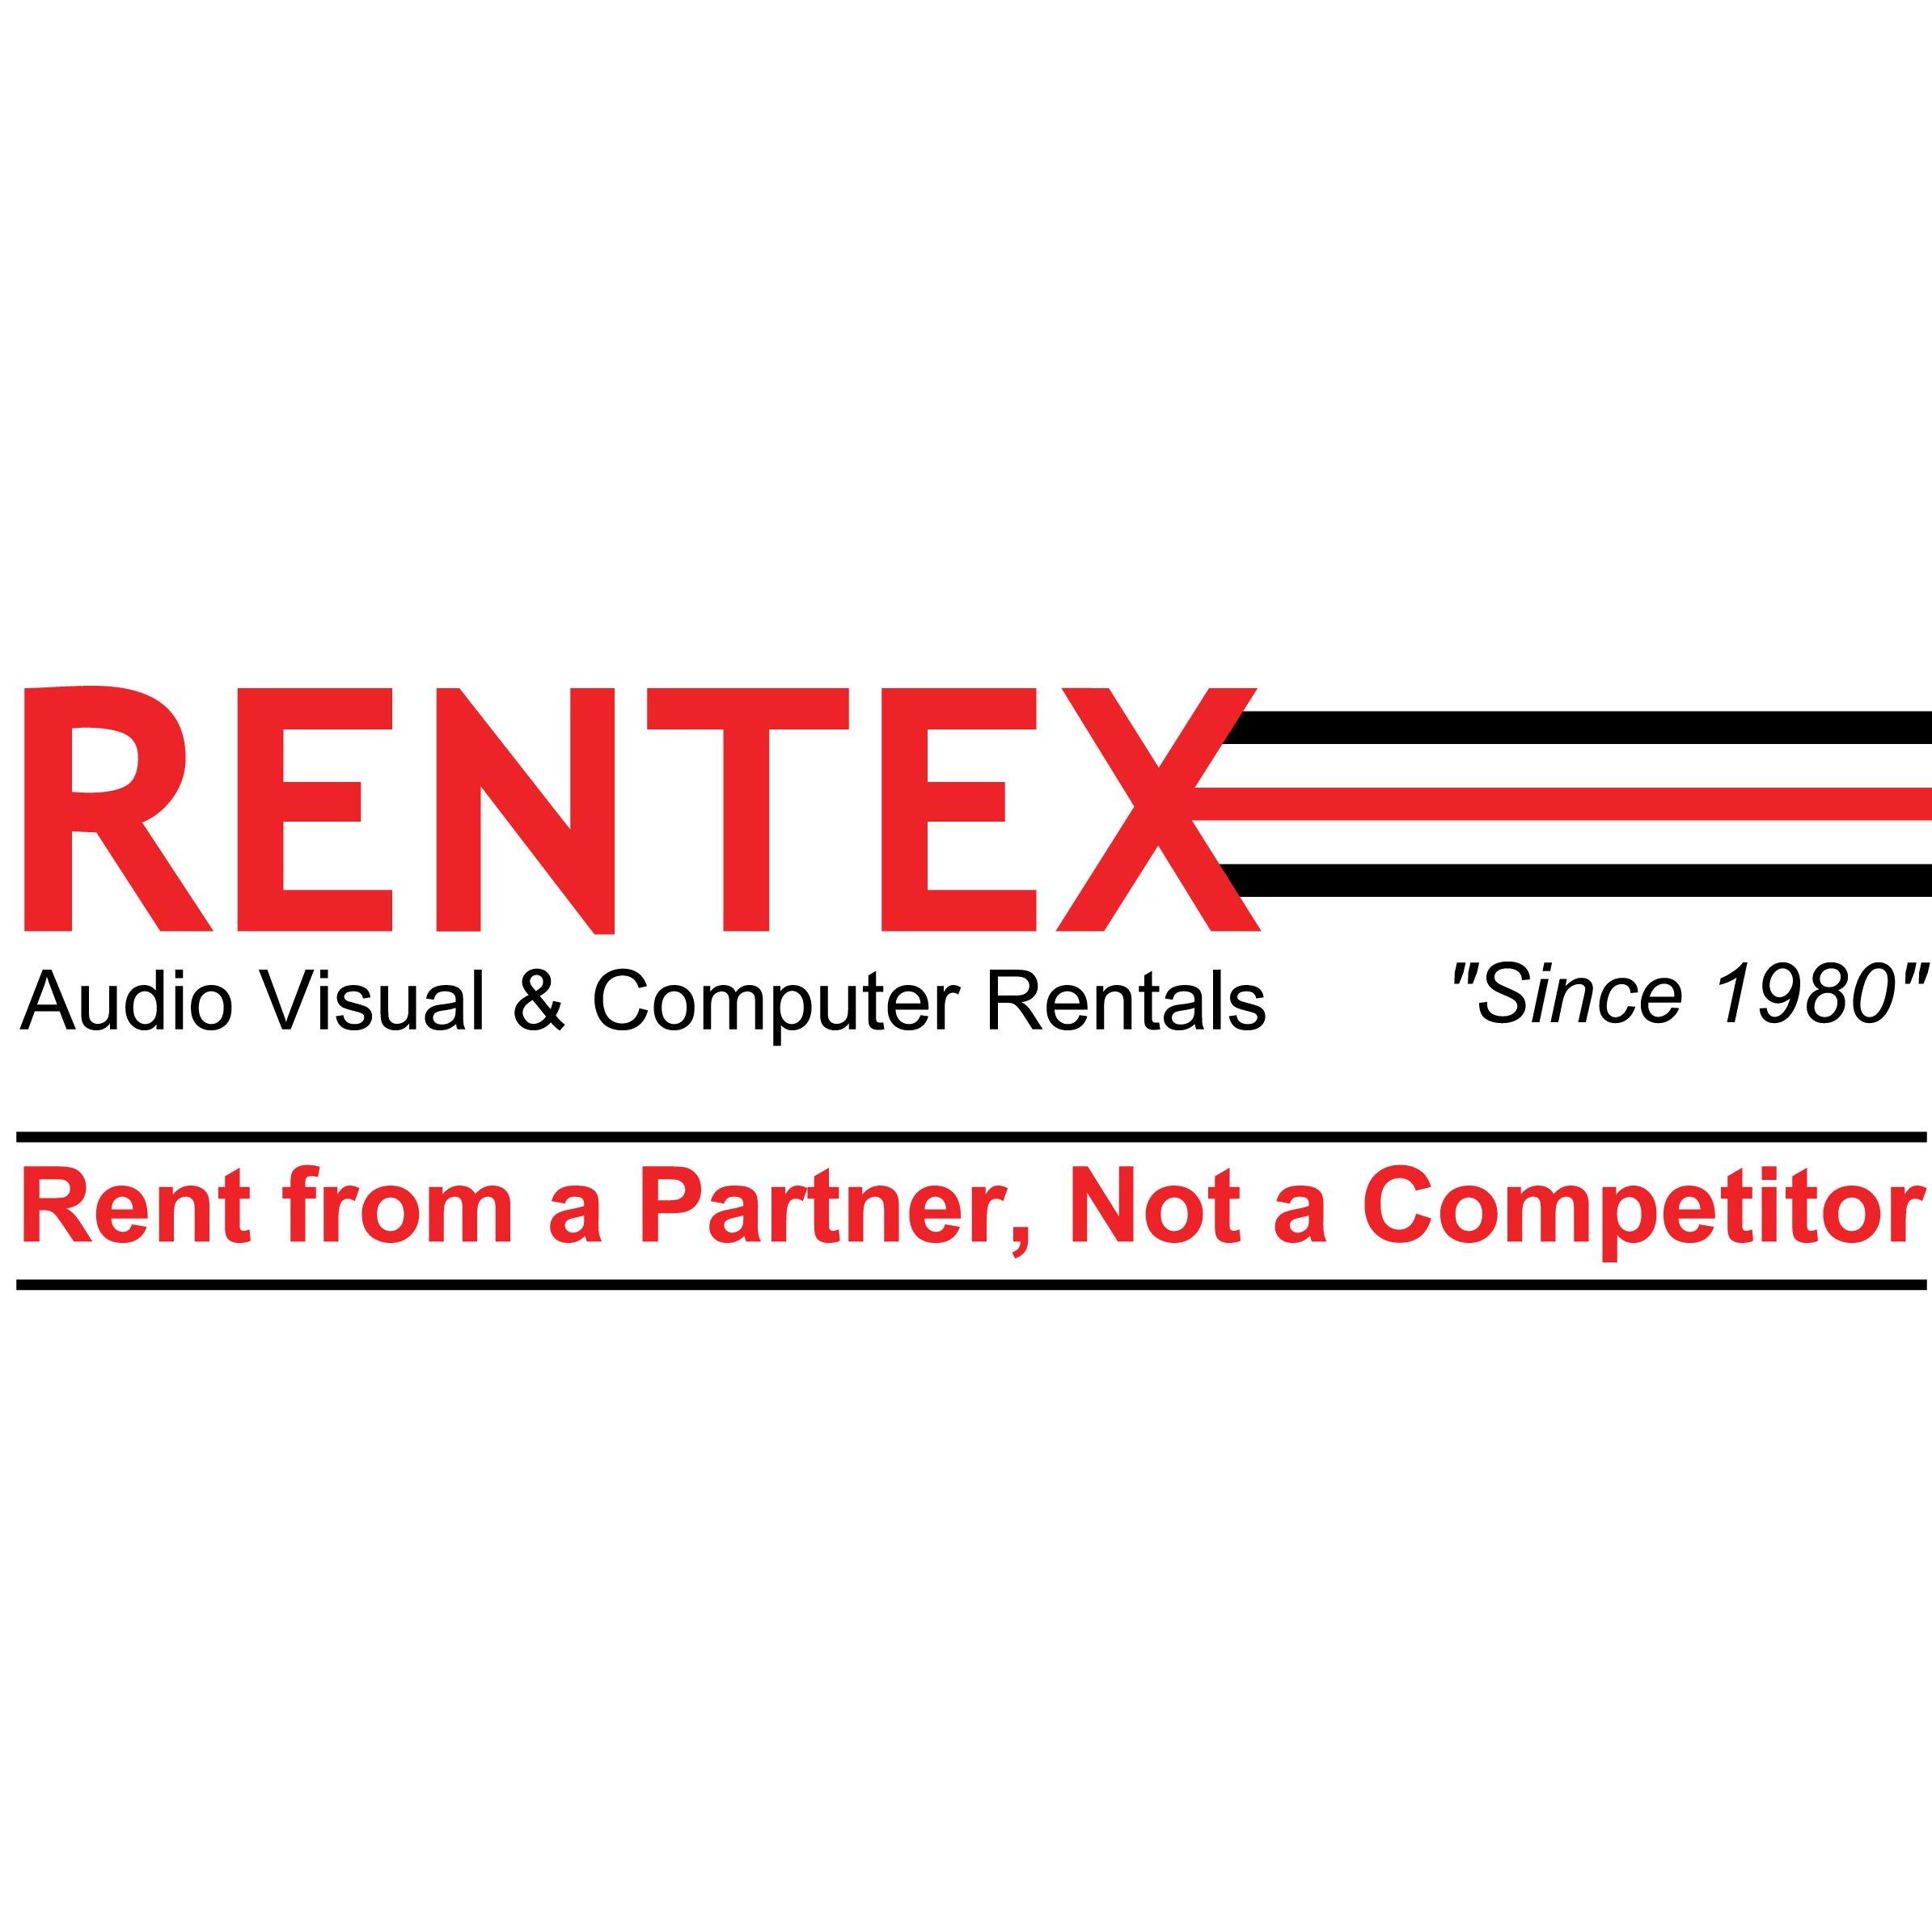 Rentex Audio Visual & Computer Rentals - Philadelphia, PA Photo